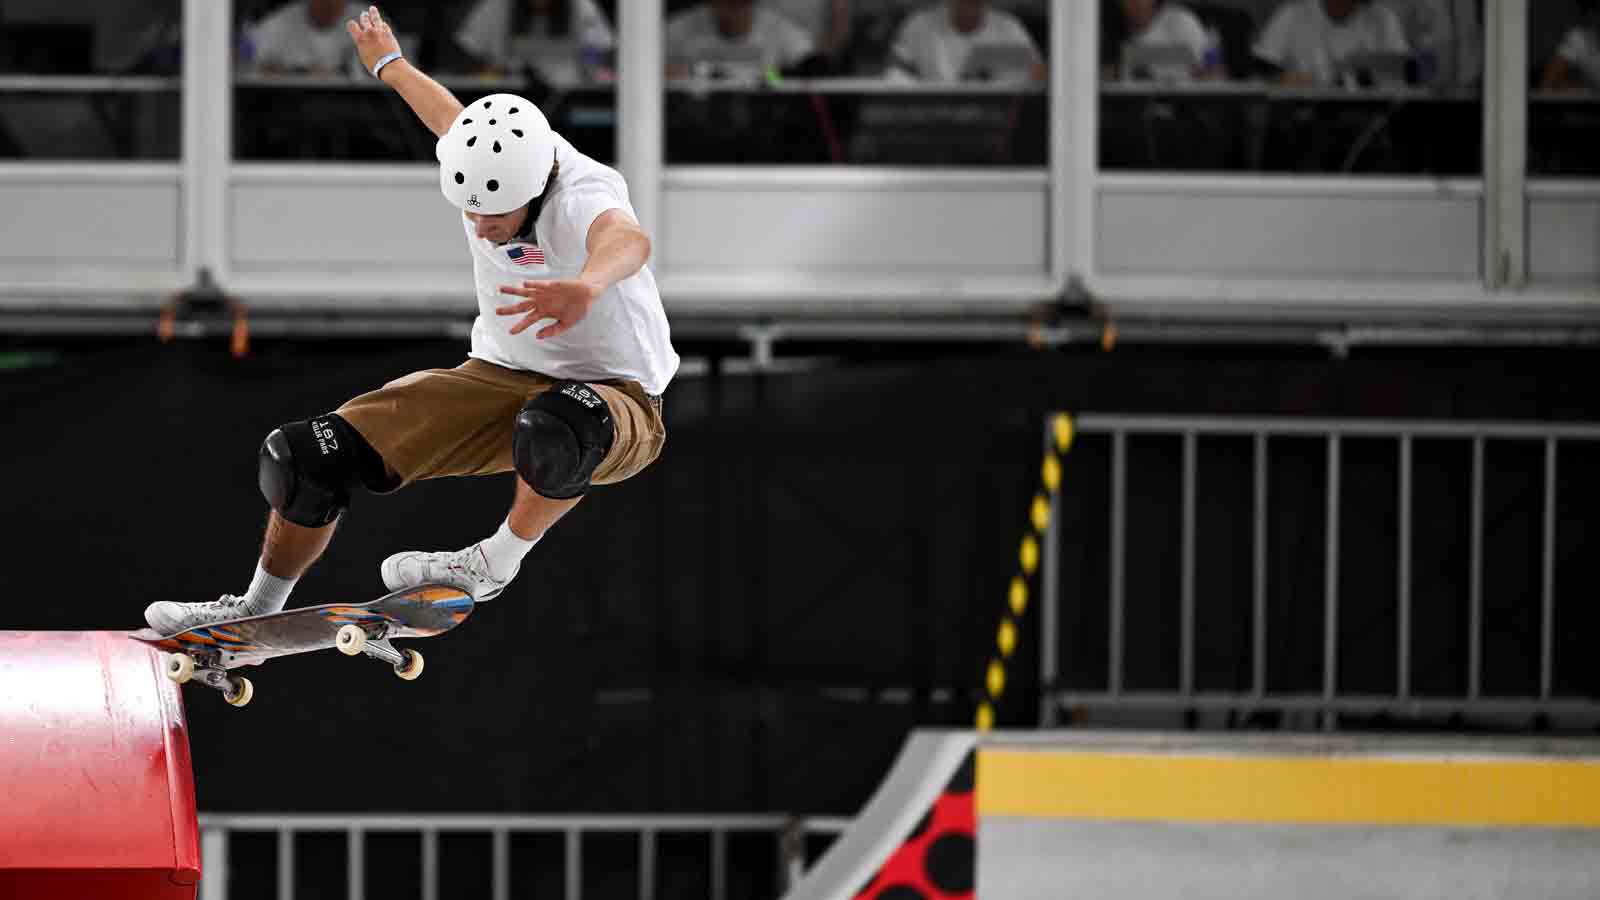 Jagger Eaton hoping to repeat as medal winner in Olympic skateboarding